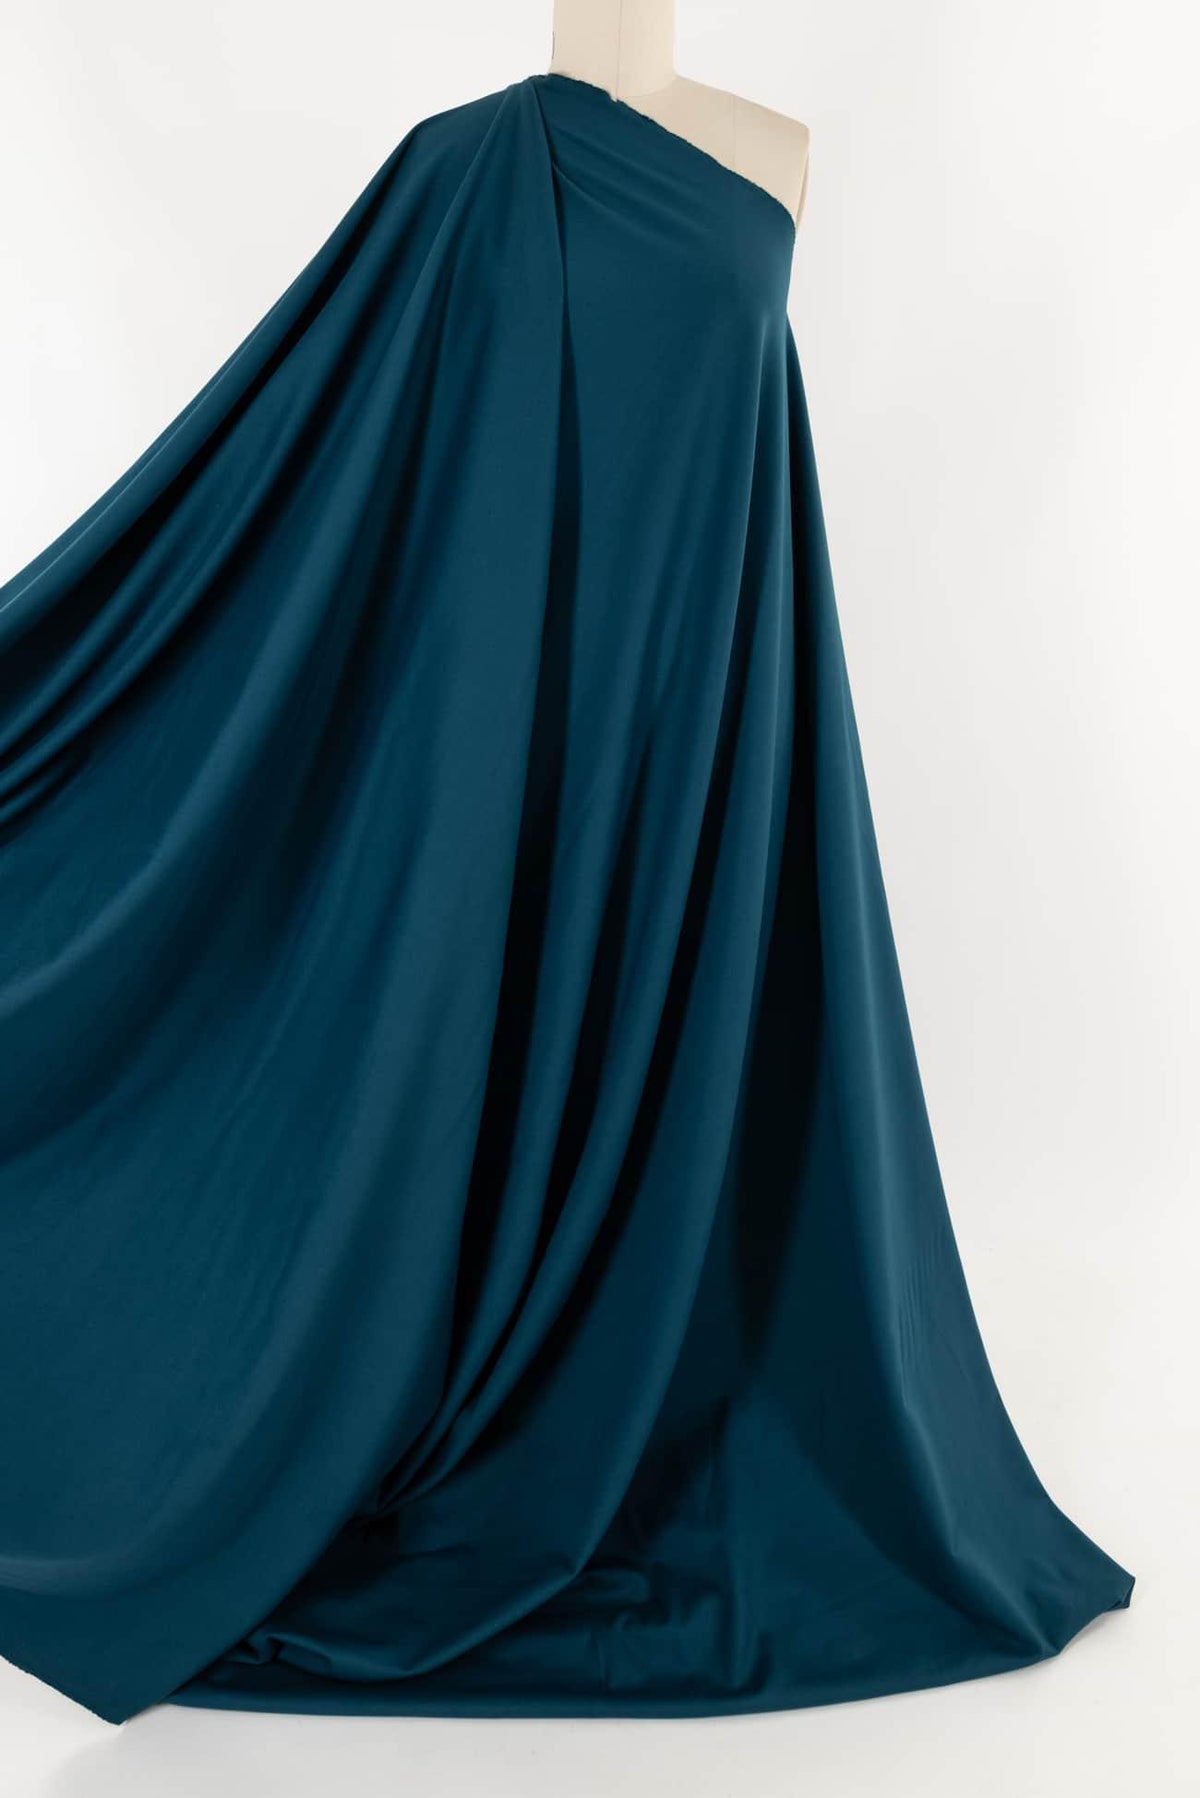 Tucson Turquoise USA Ponte Knit - Marcy Tilton Fabrics